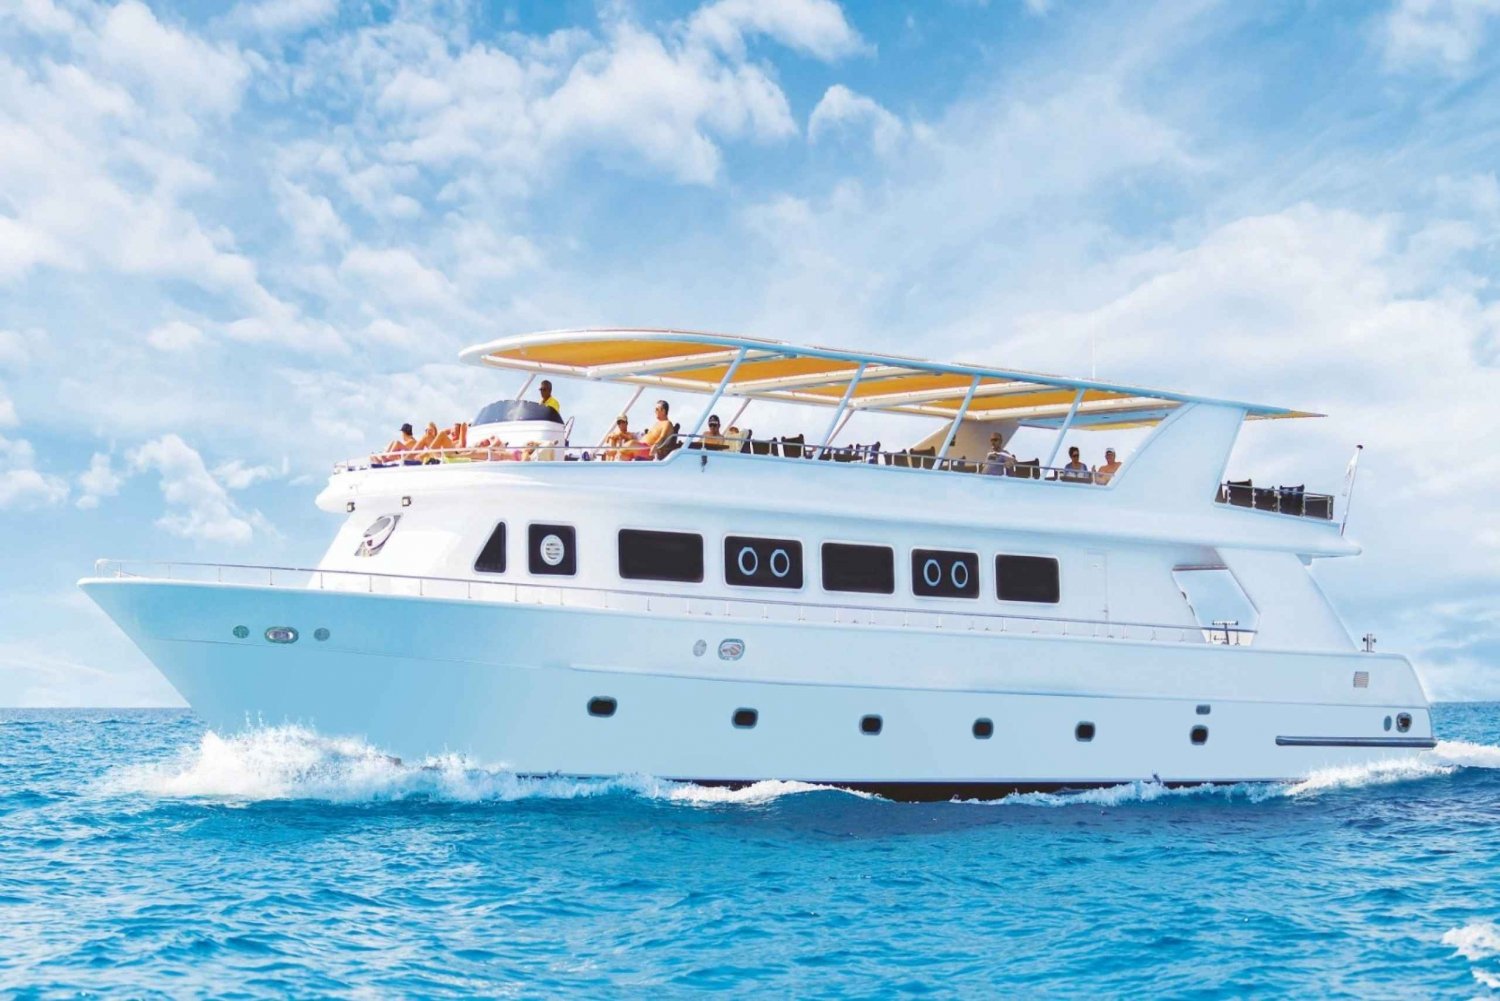 Sharm el-Sheikh: Premium Ras Mohammed & White Island cruise